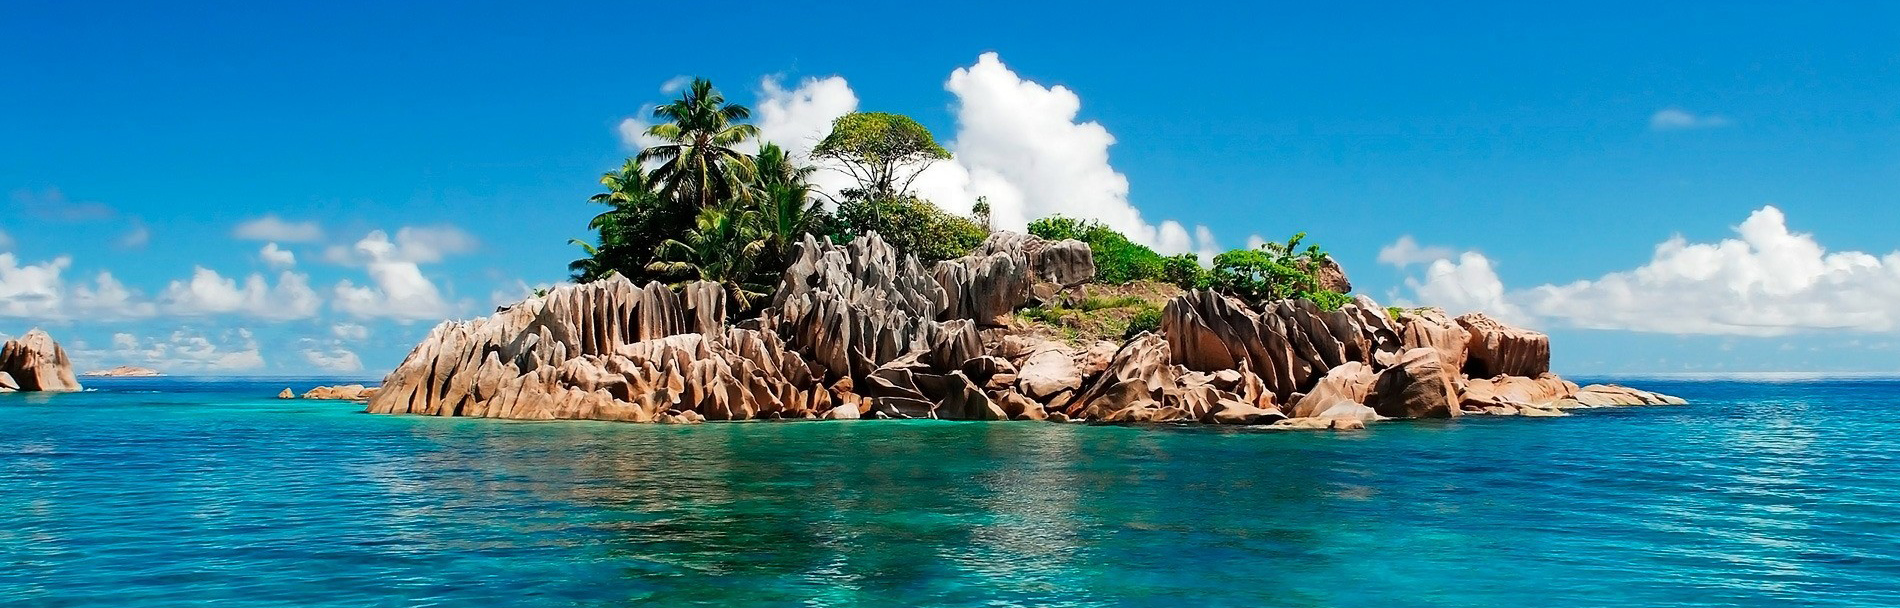 Seychelles Tour Packages